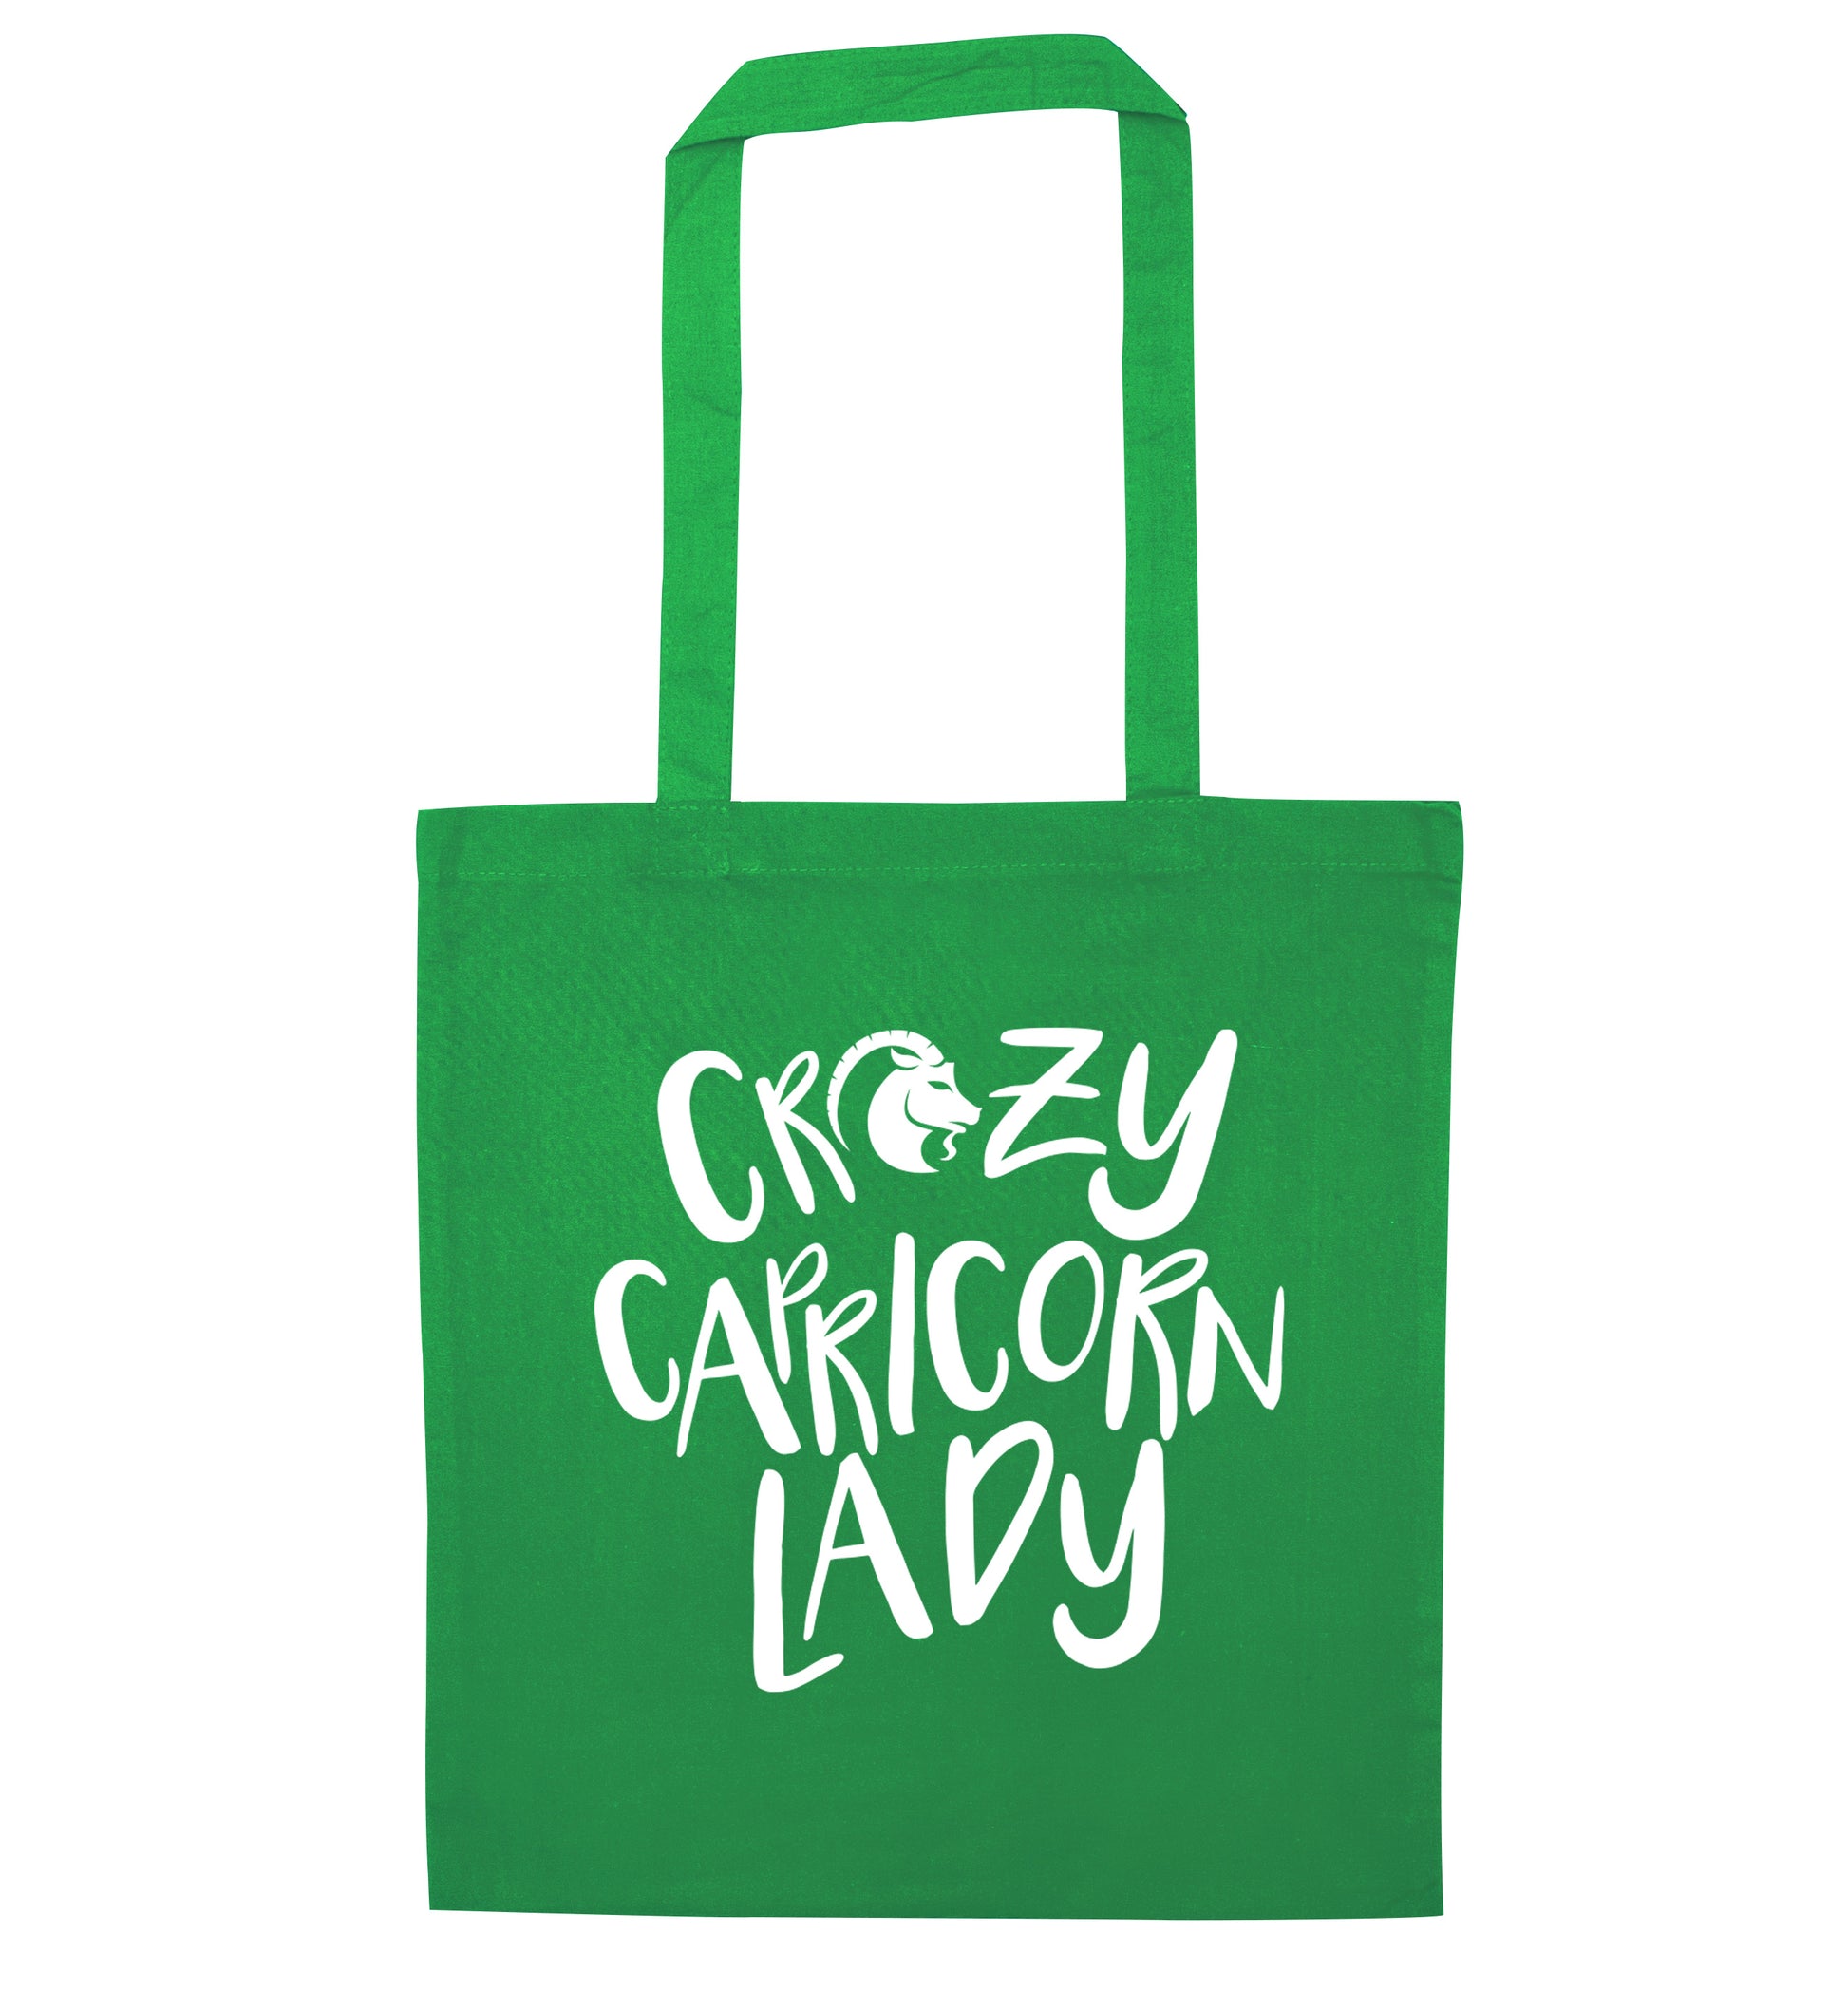 Crazy capricorn lady green tote bag